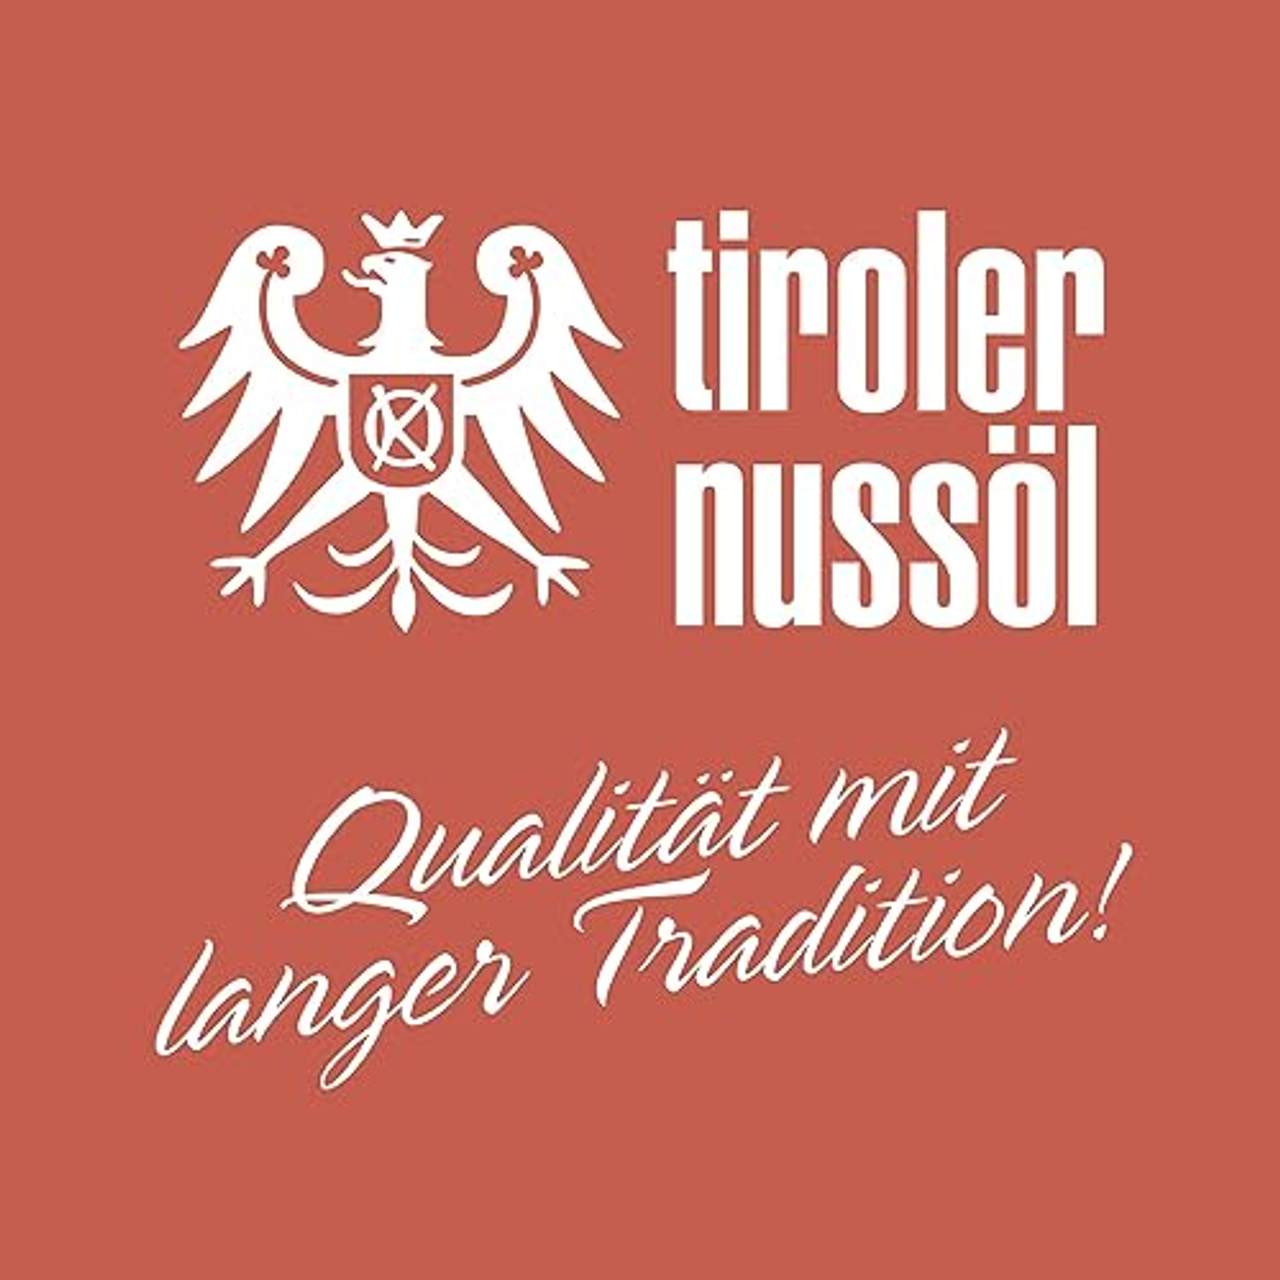 Tiroler Nussöl Sonnenmilch original wasserfest LSF 30